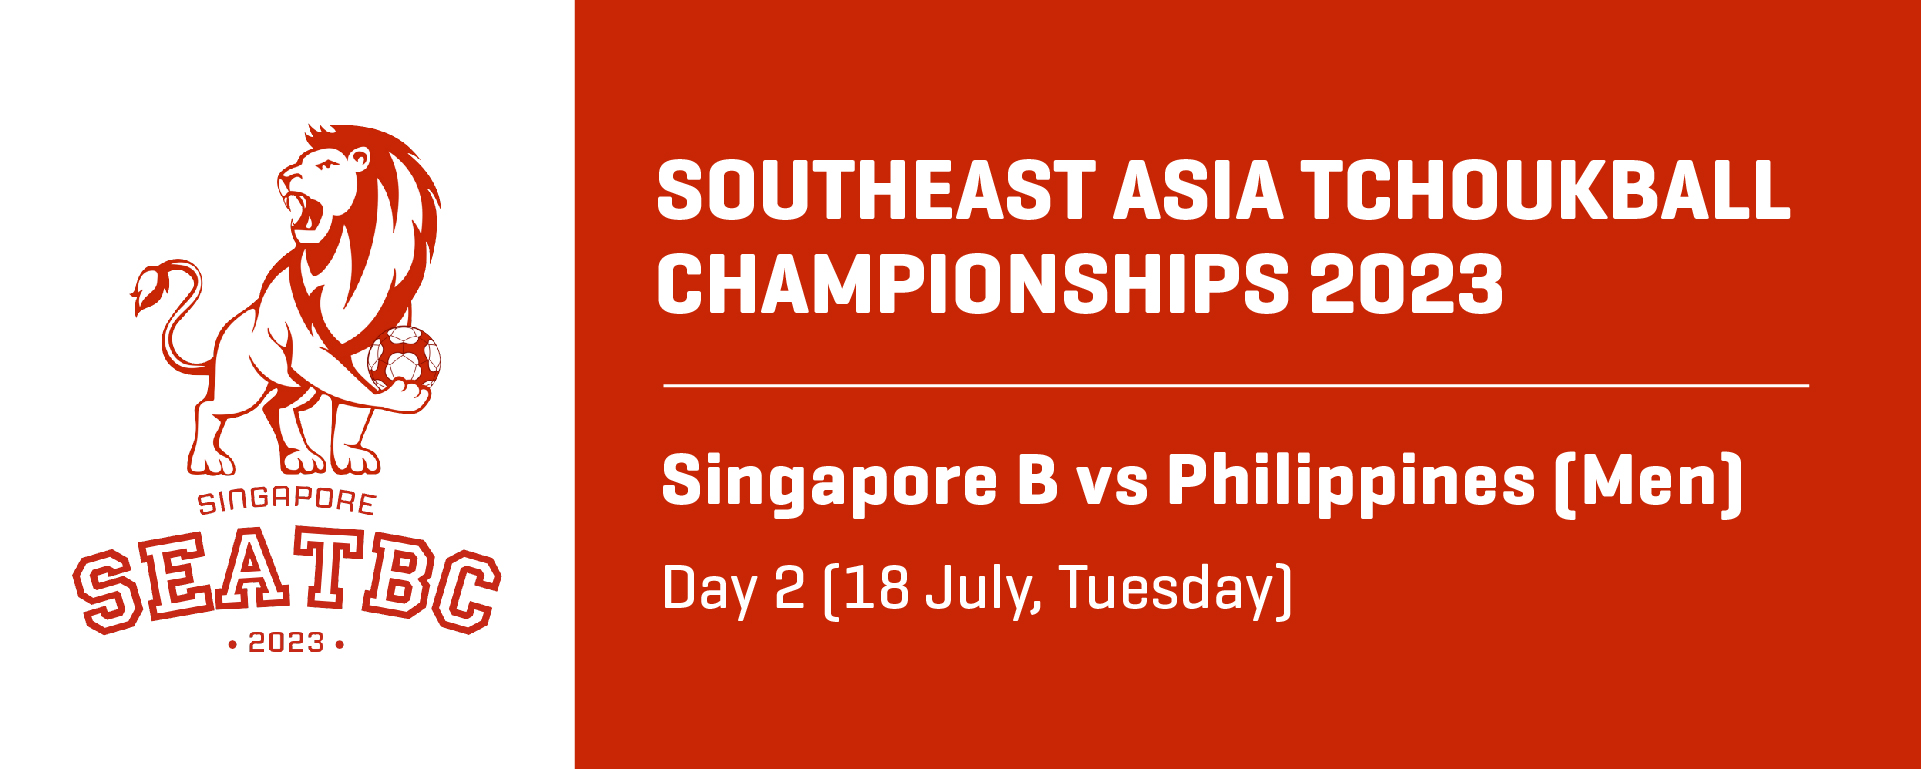 Southeast Asia Tchoukball Championships 2023 | Men | Singapore B vs Philippines